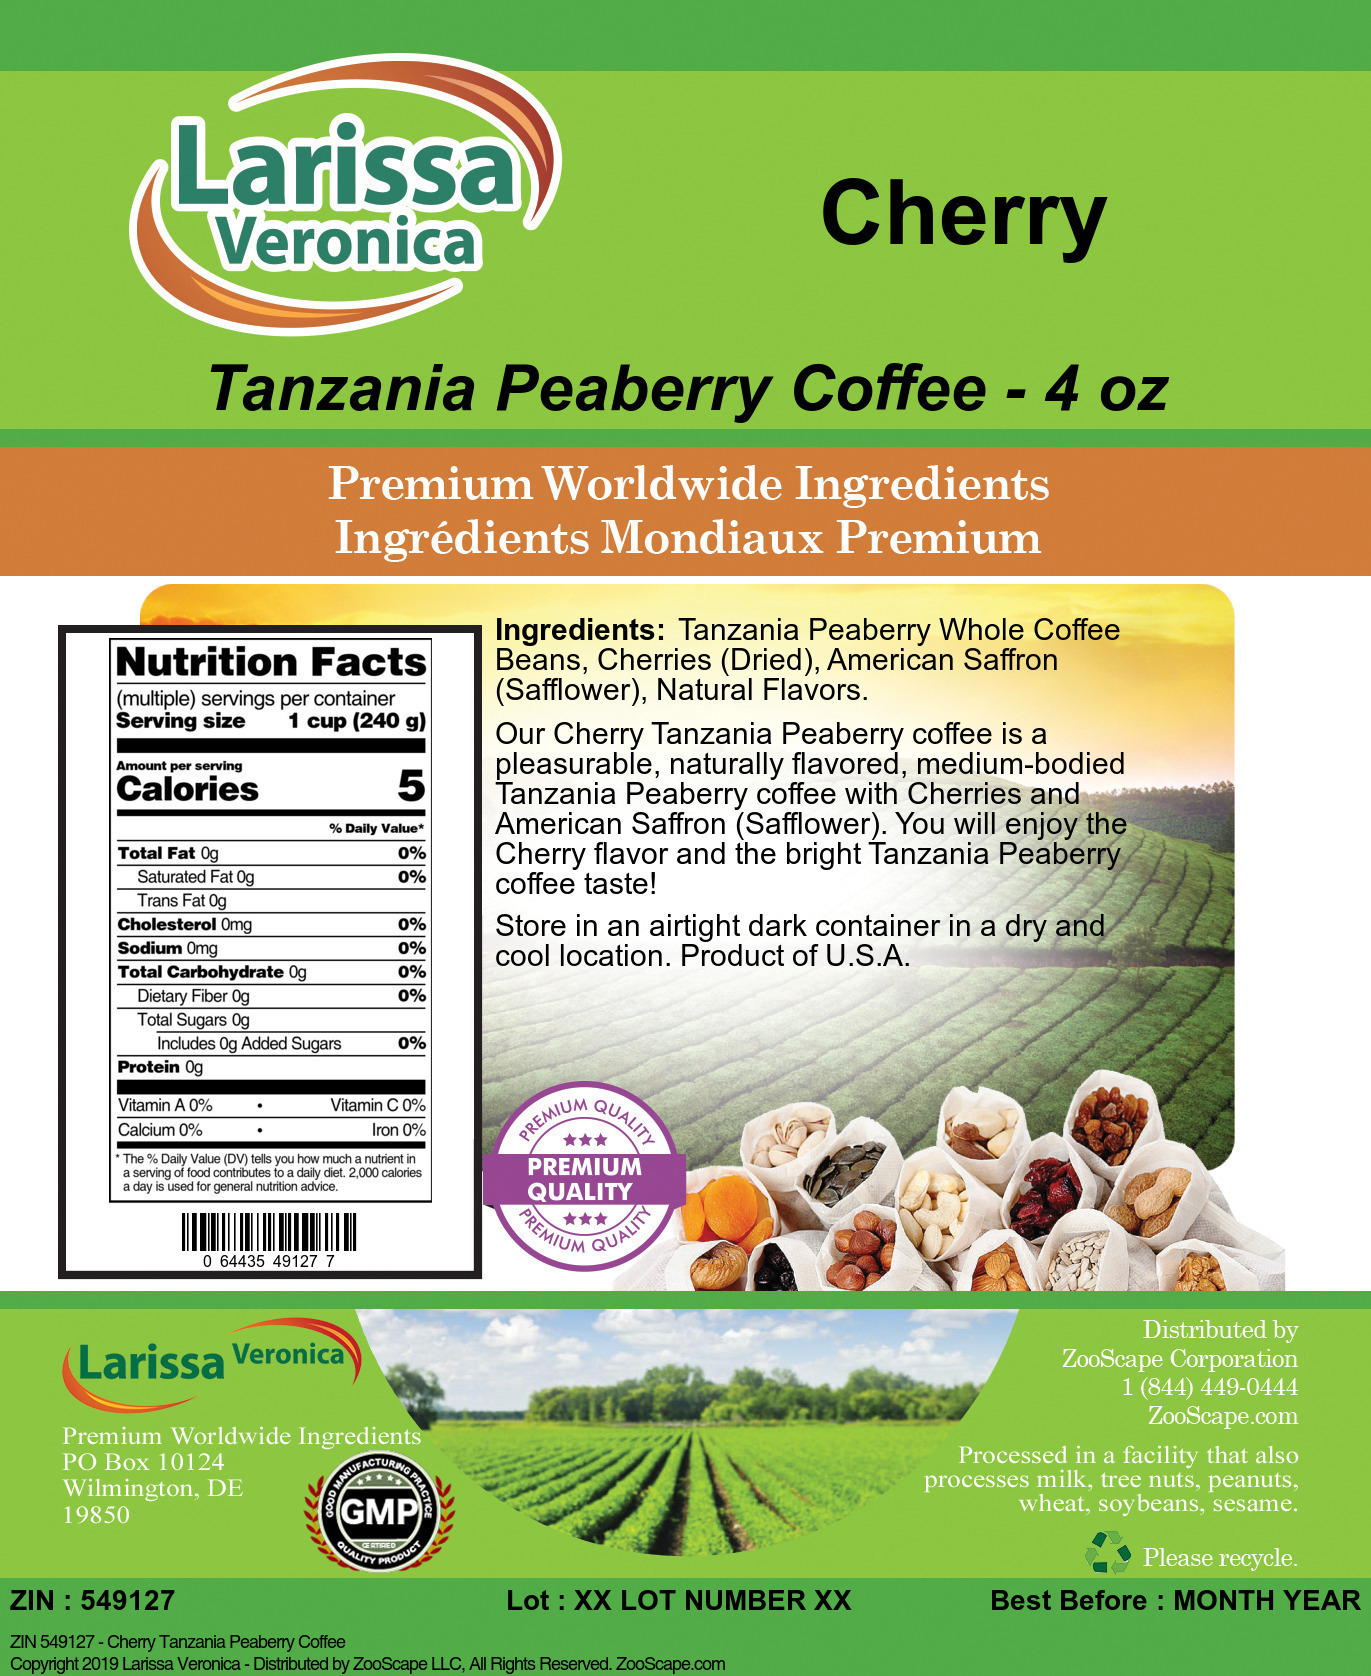 Cherry Tanzania Peaberry Coffee - Label